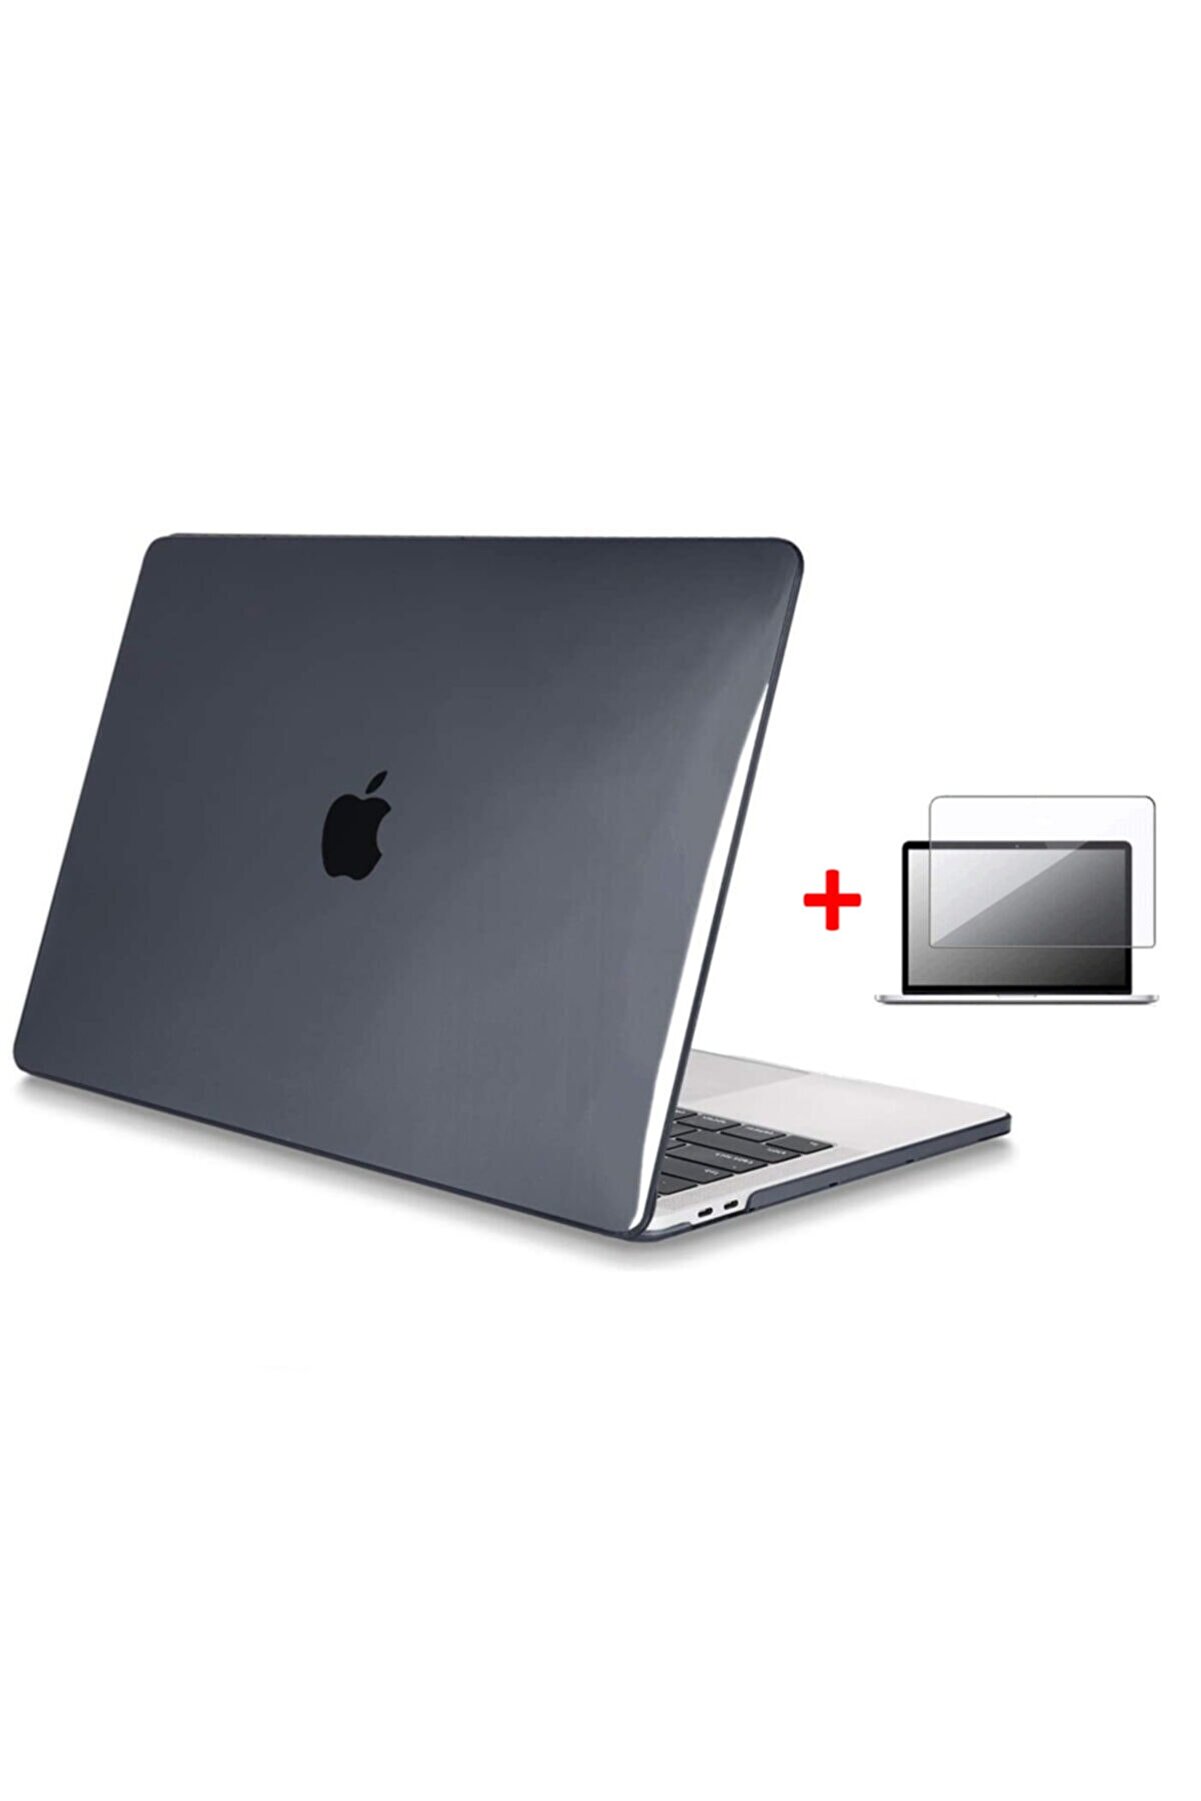 TLOSS Macbook Air 13 M1 A2337 2020 Uyumlu Kristal Siyah Koruma Kılıfı Kapak ve Ekran Filmi